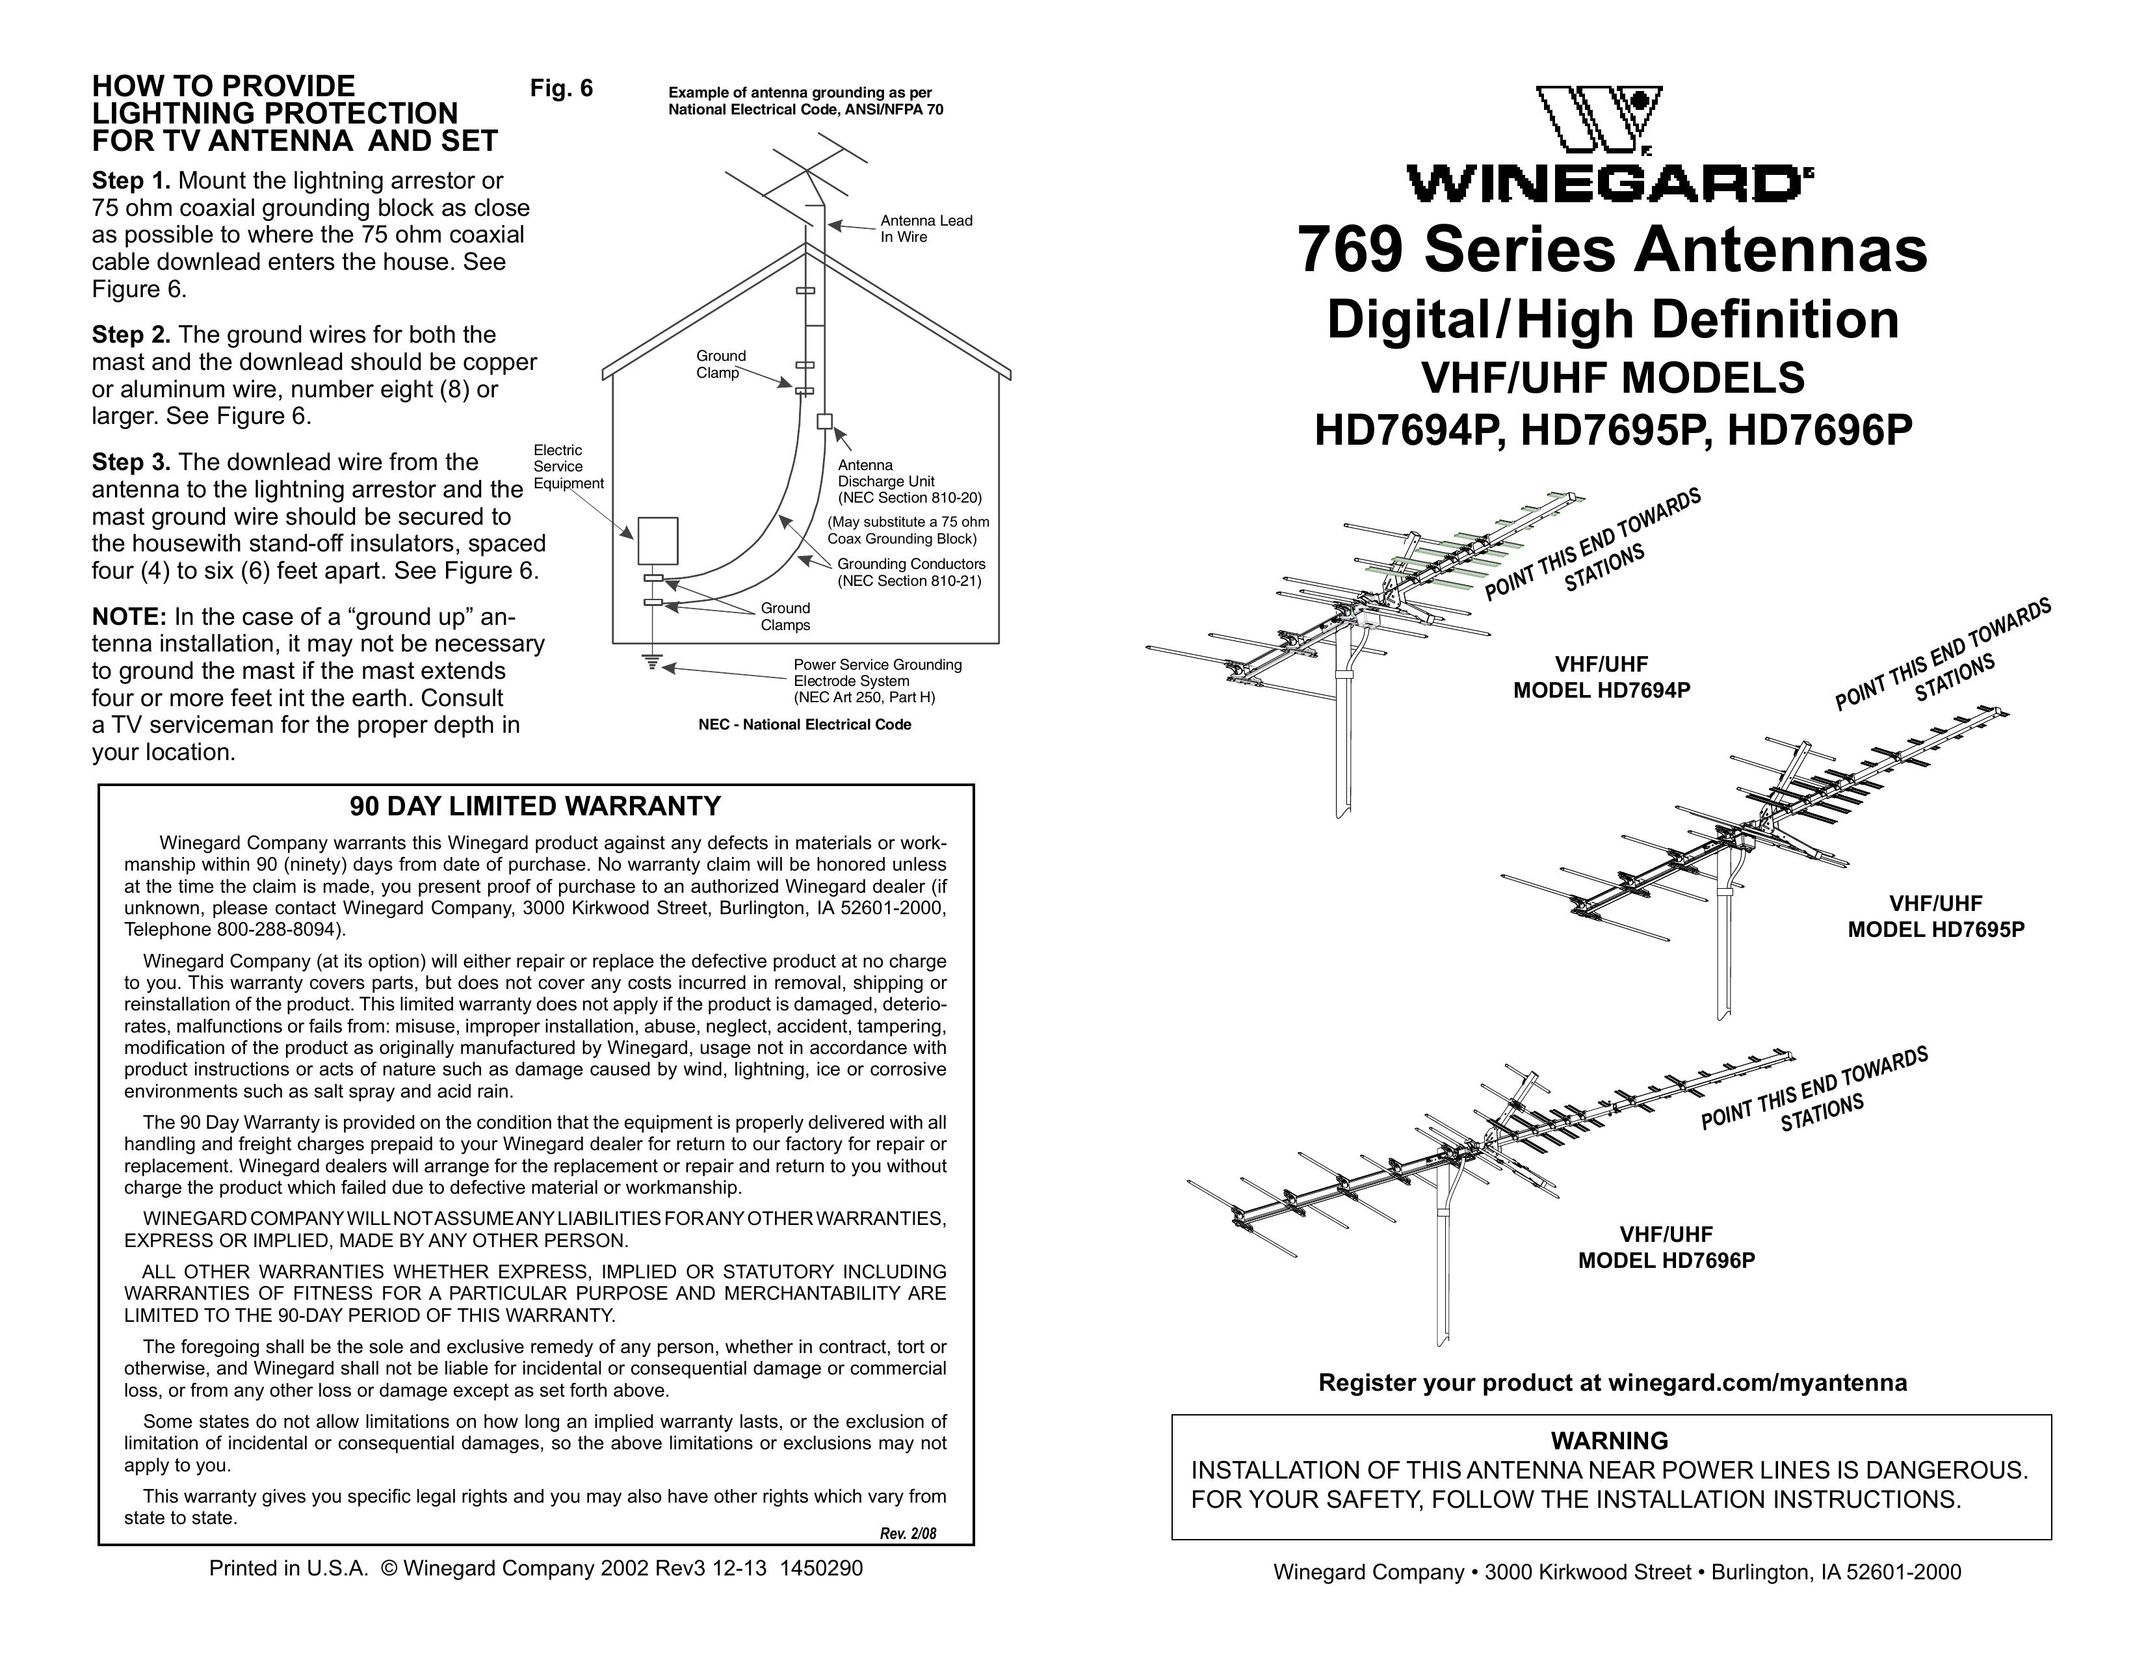 Winegard HD7694P Surge Protector User Manual